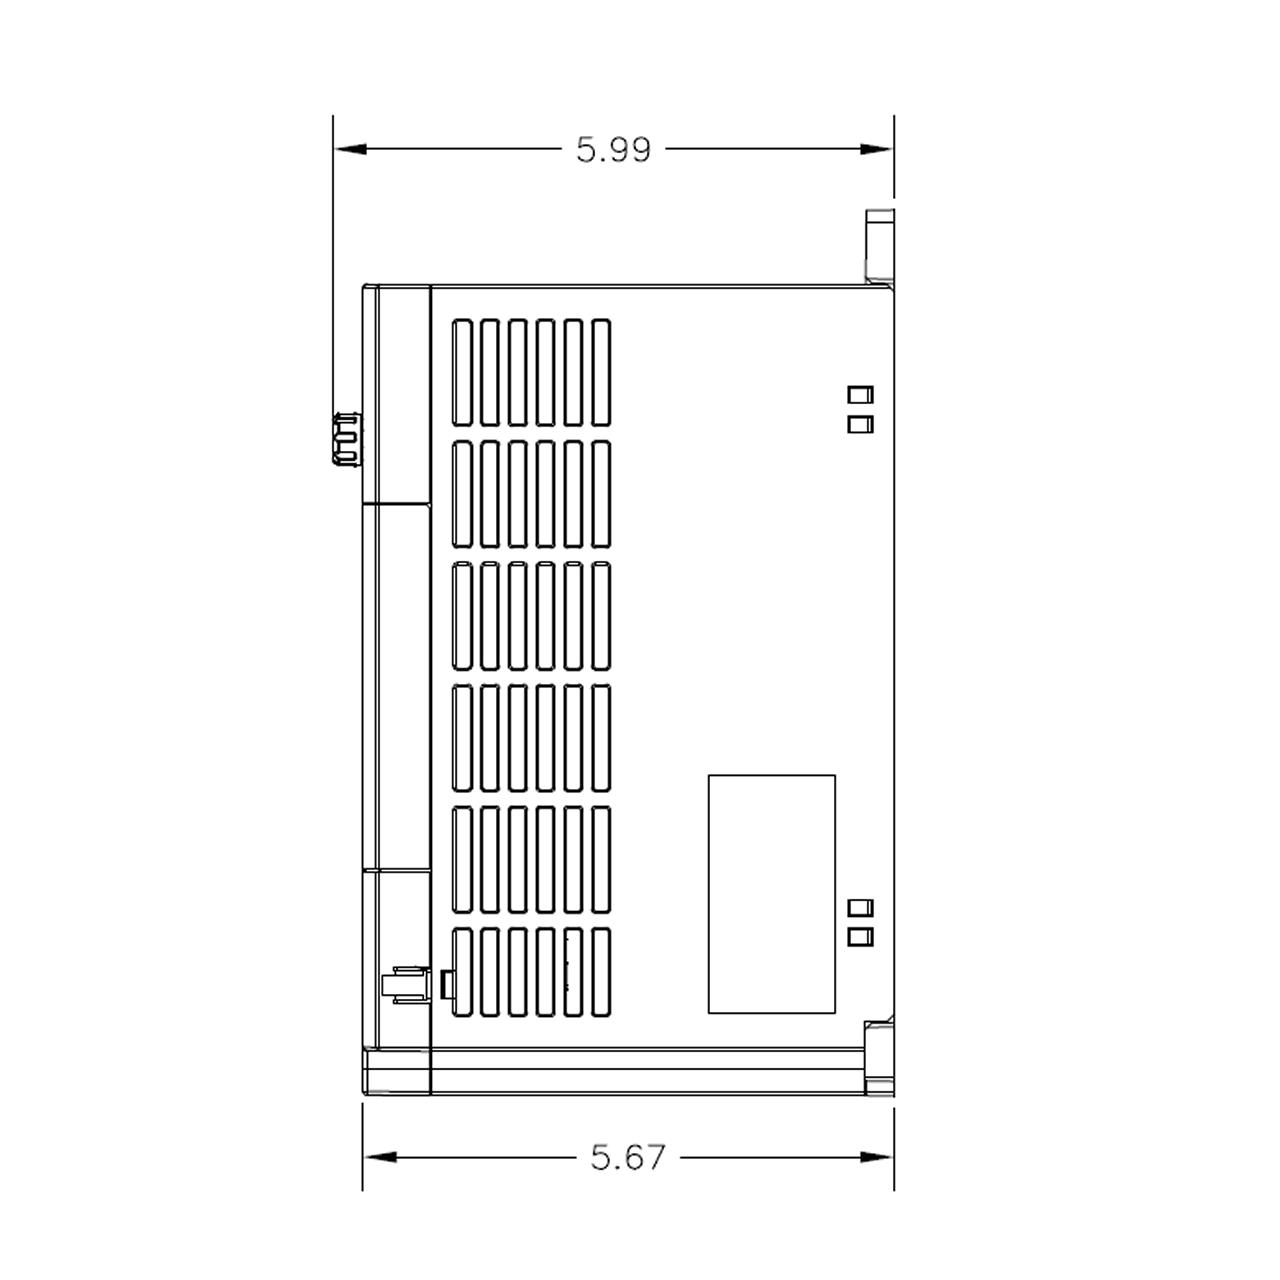 Benshaw RSI-010-GM2-2C side dimensions